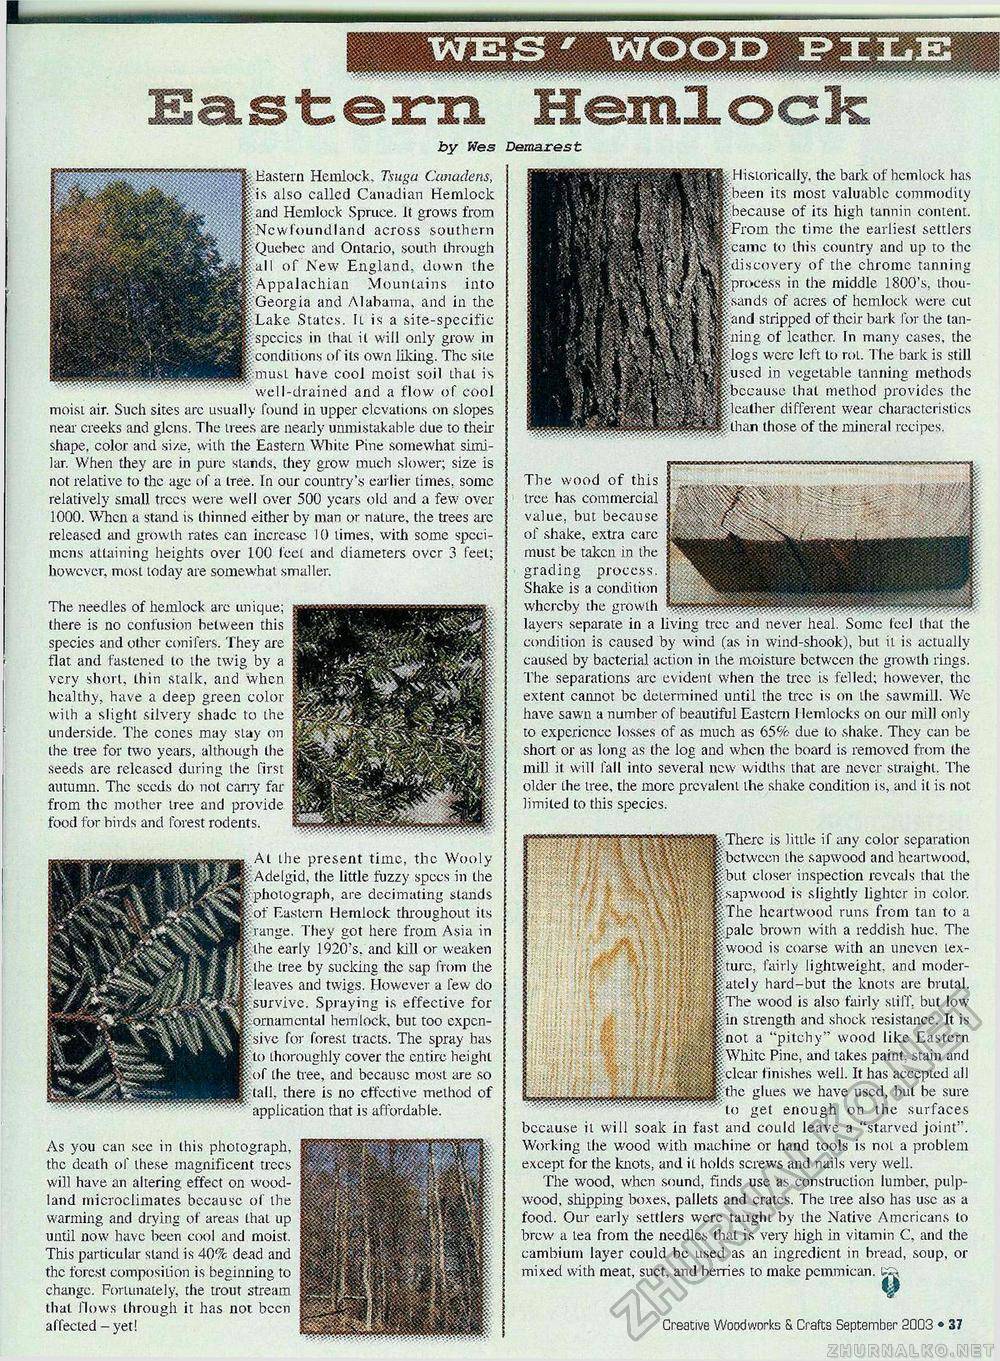 Creative Woodworks & crafts 2003-09,  37